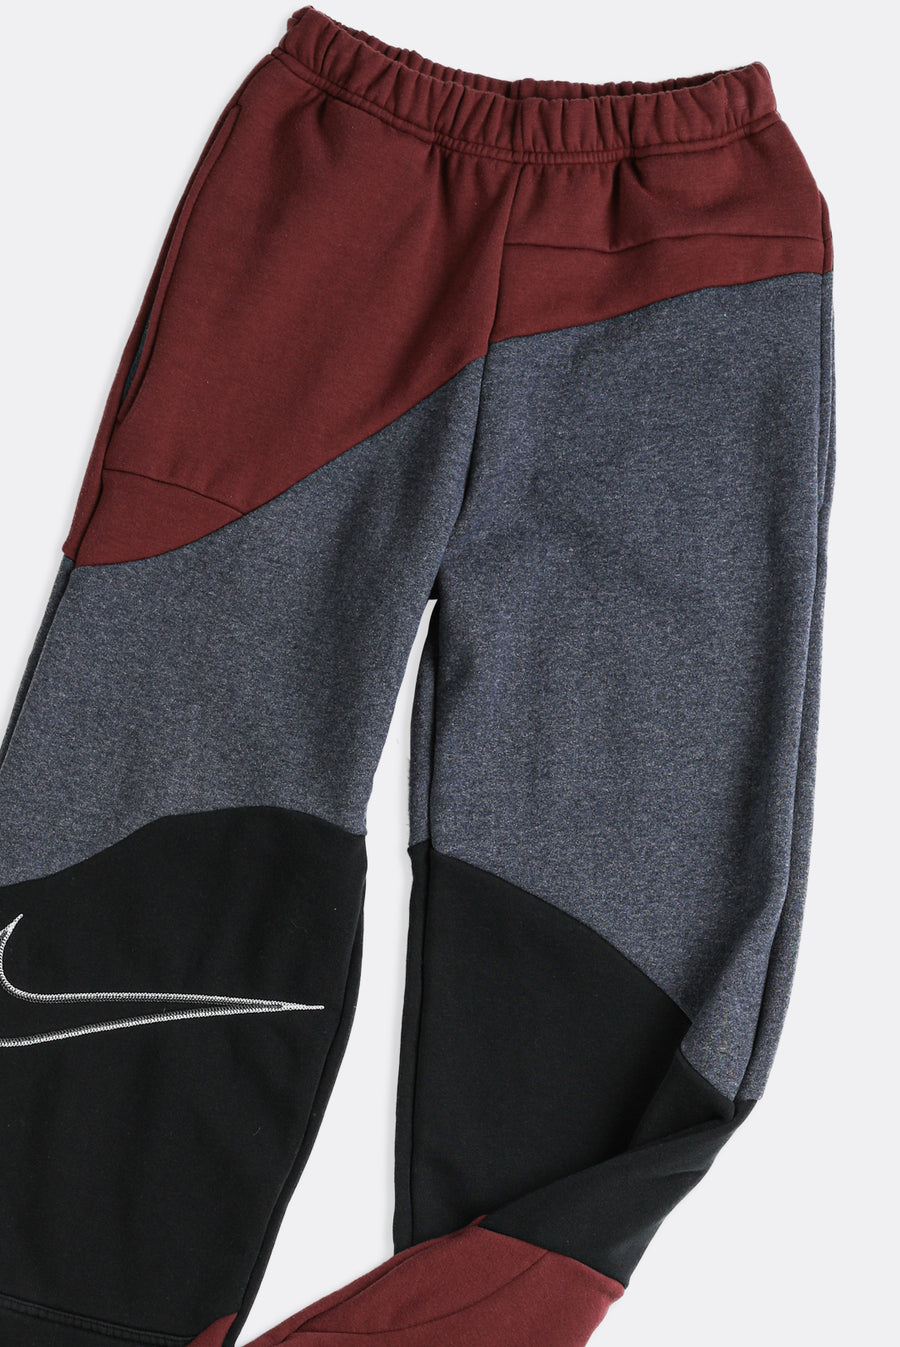 Rework Nike Wave Sweatpants - XS